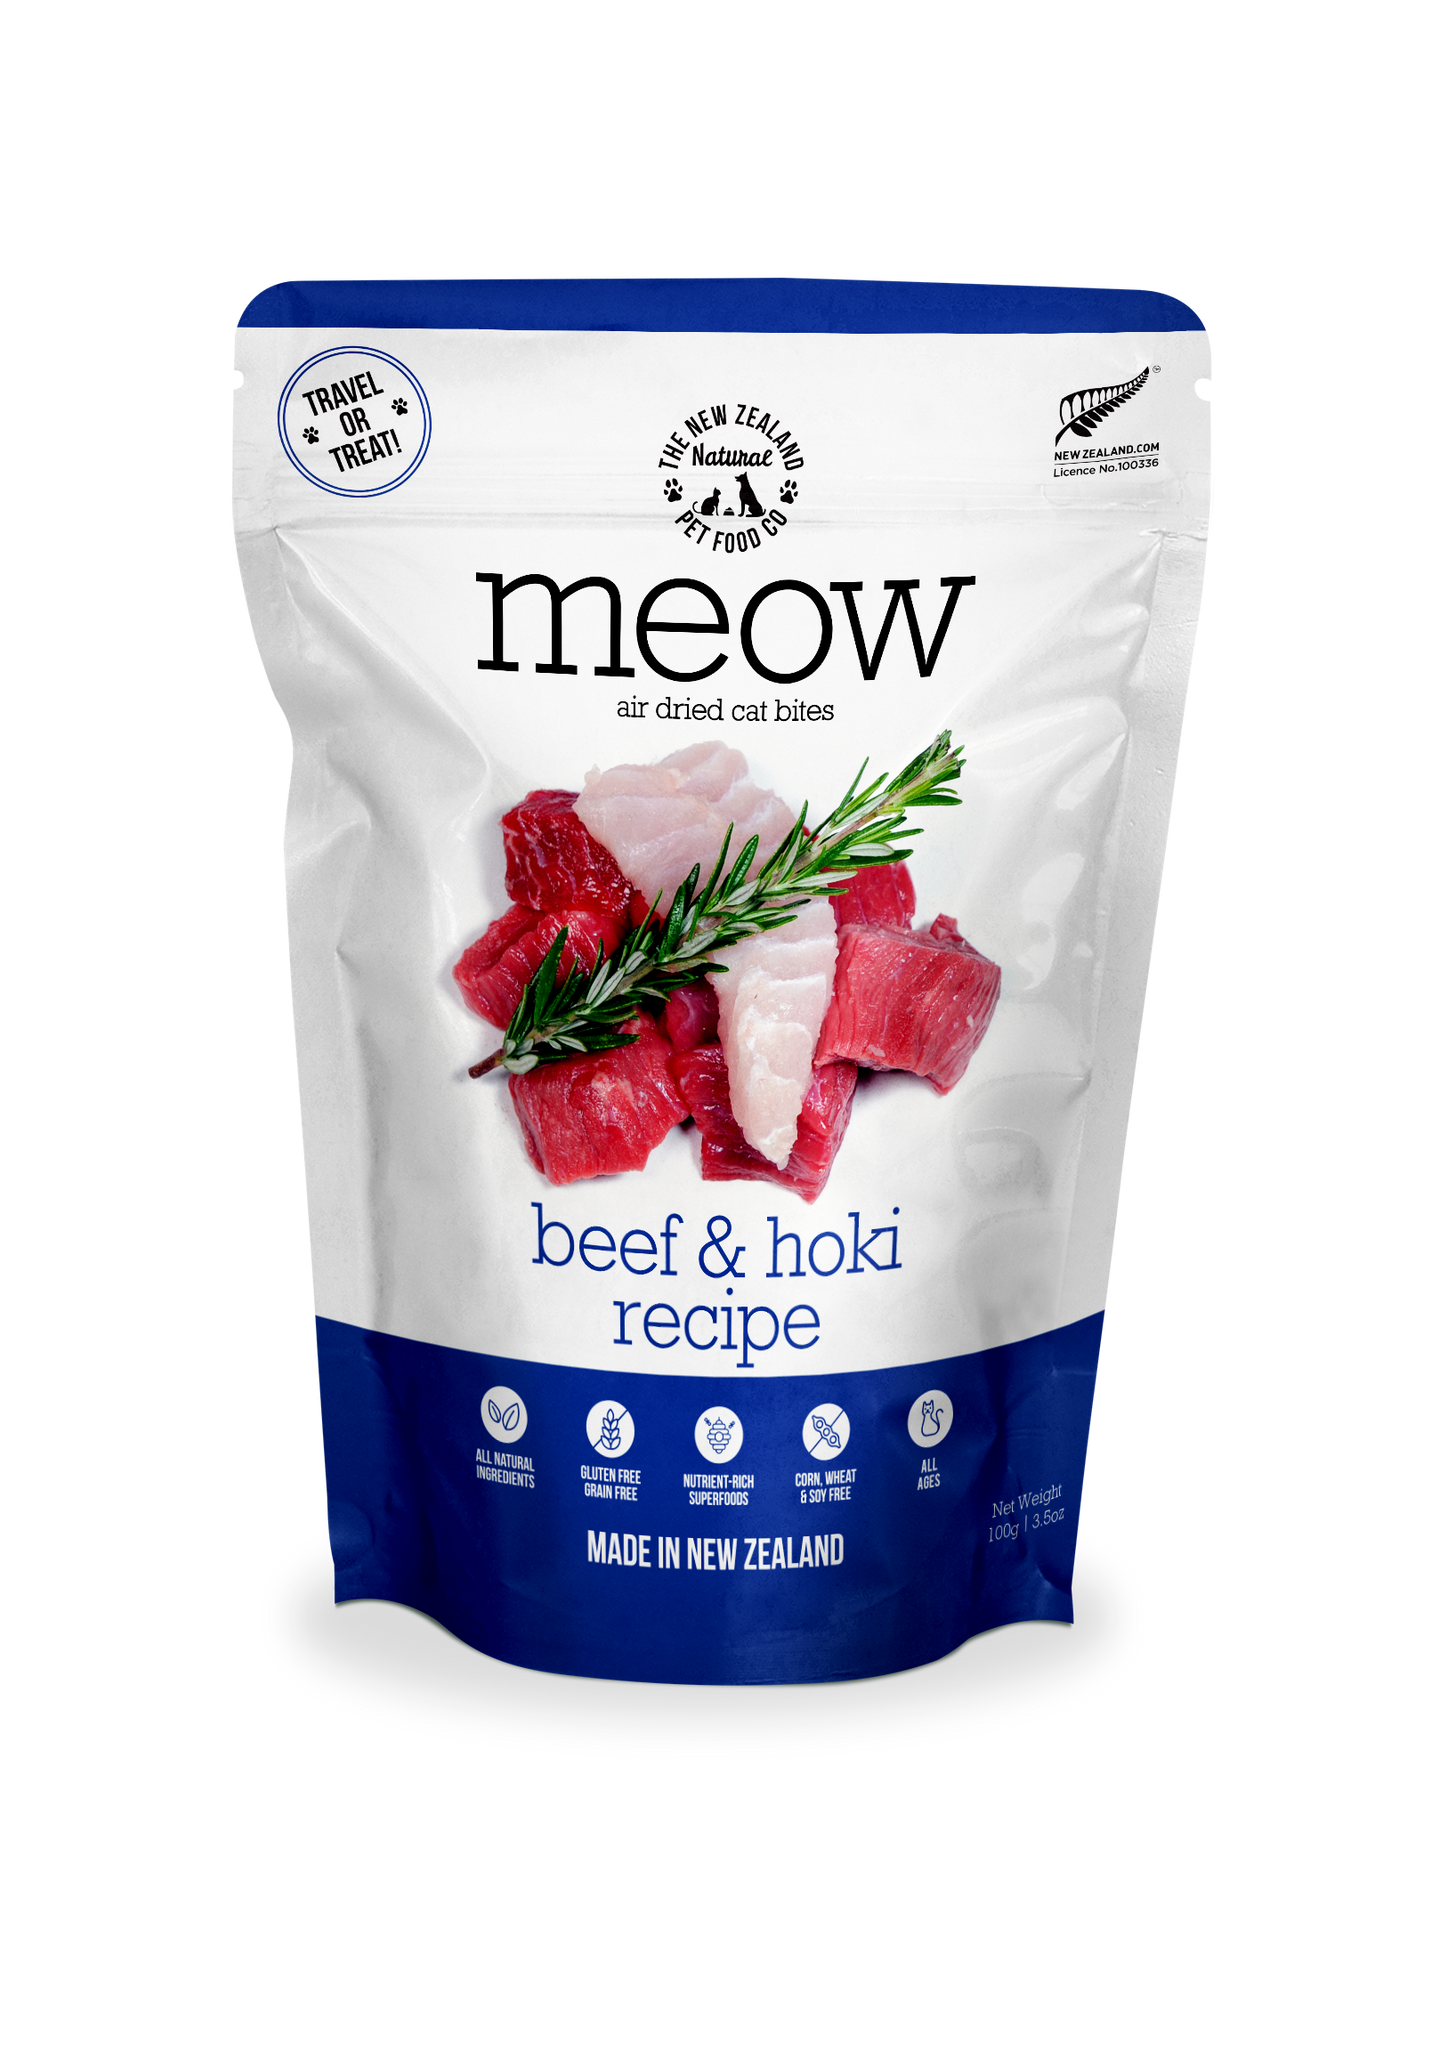 New Zealand Natural Air Dried Meow Beef & Hoki 3.5oz